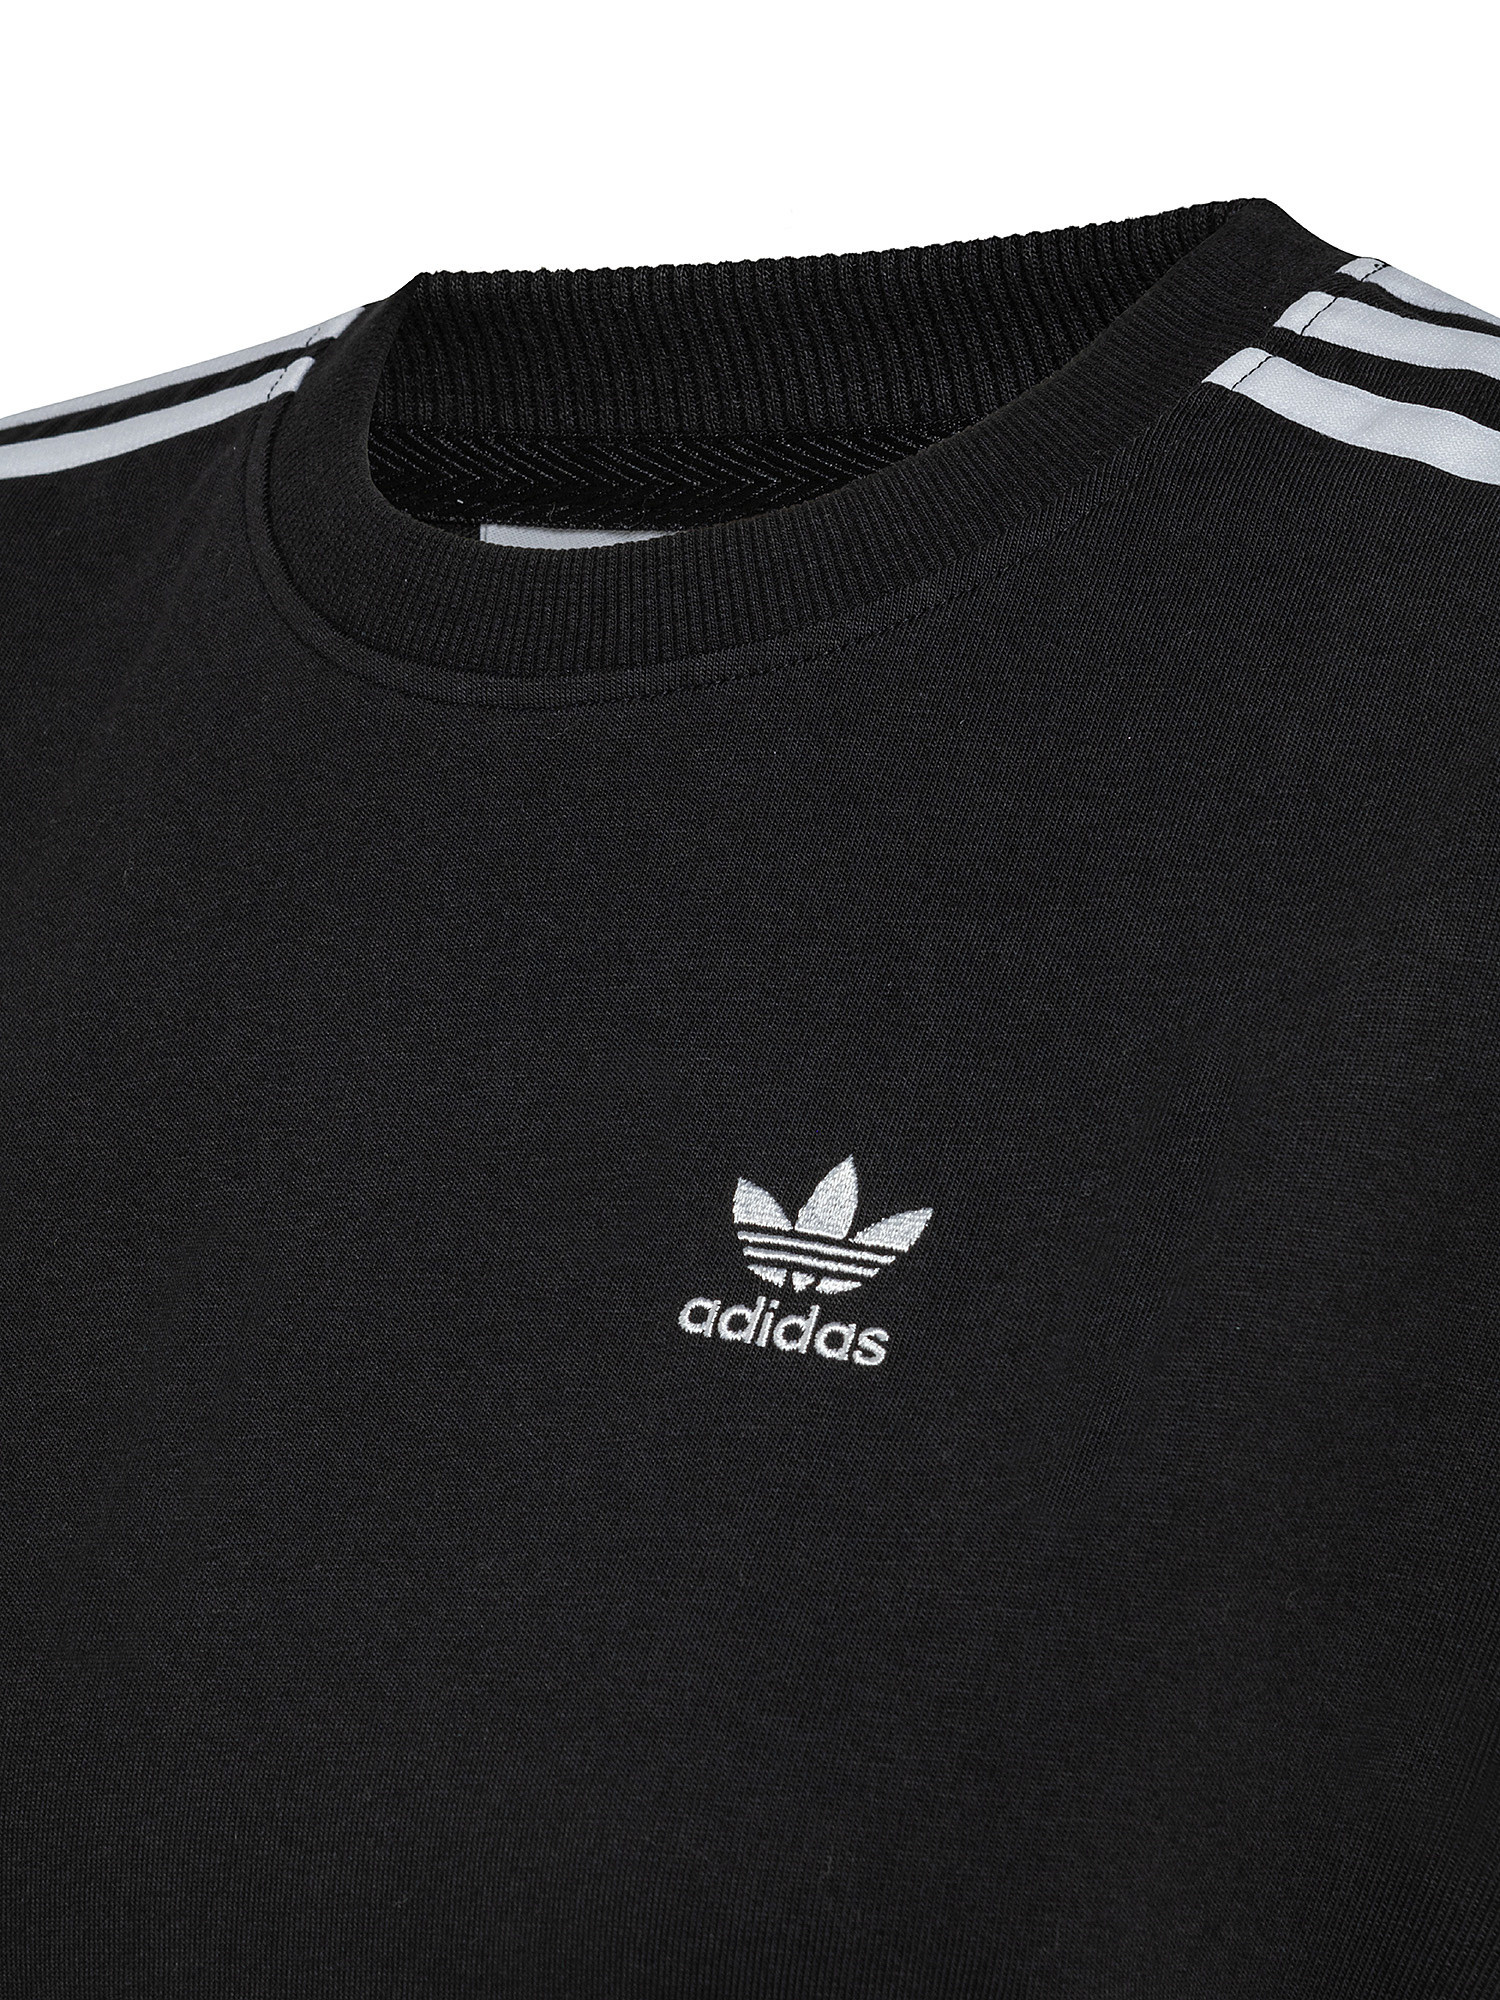 Adidas - Adicolor T-shirt with logo, Black, large image number 2